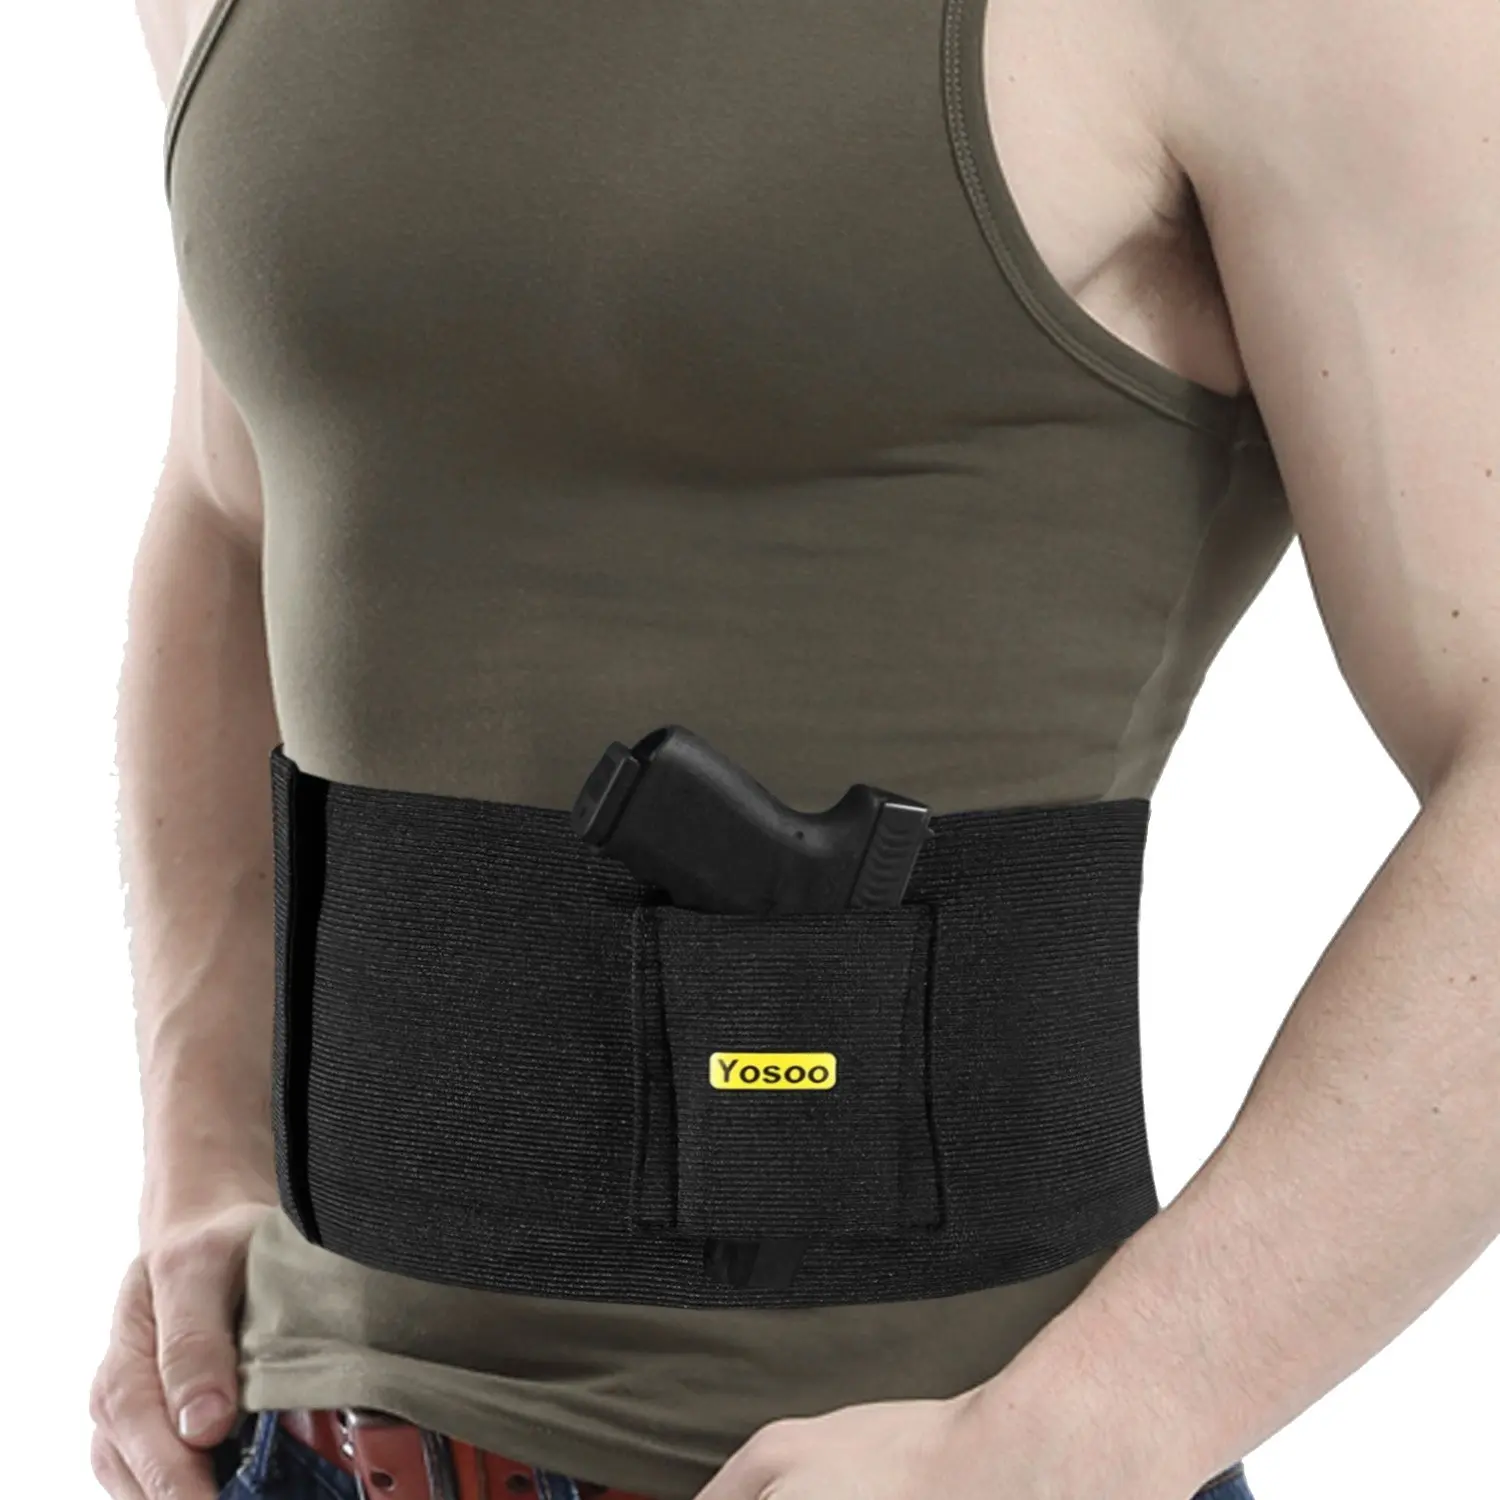 Holster Shoulder Harness Conceal Carry Gun Purse Bag Pistol Concealed Weapon DUR